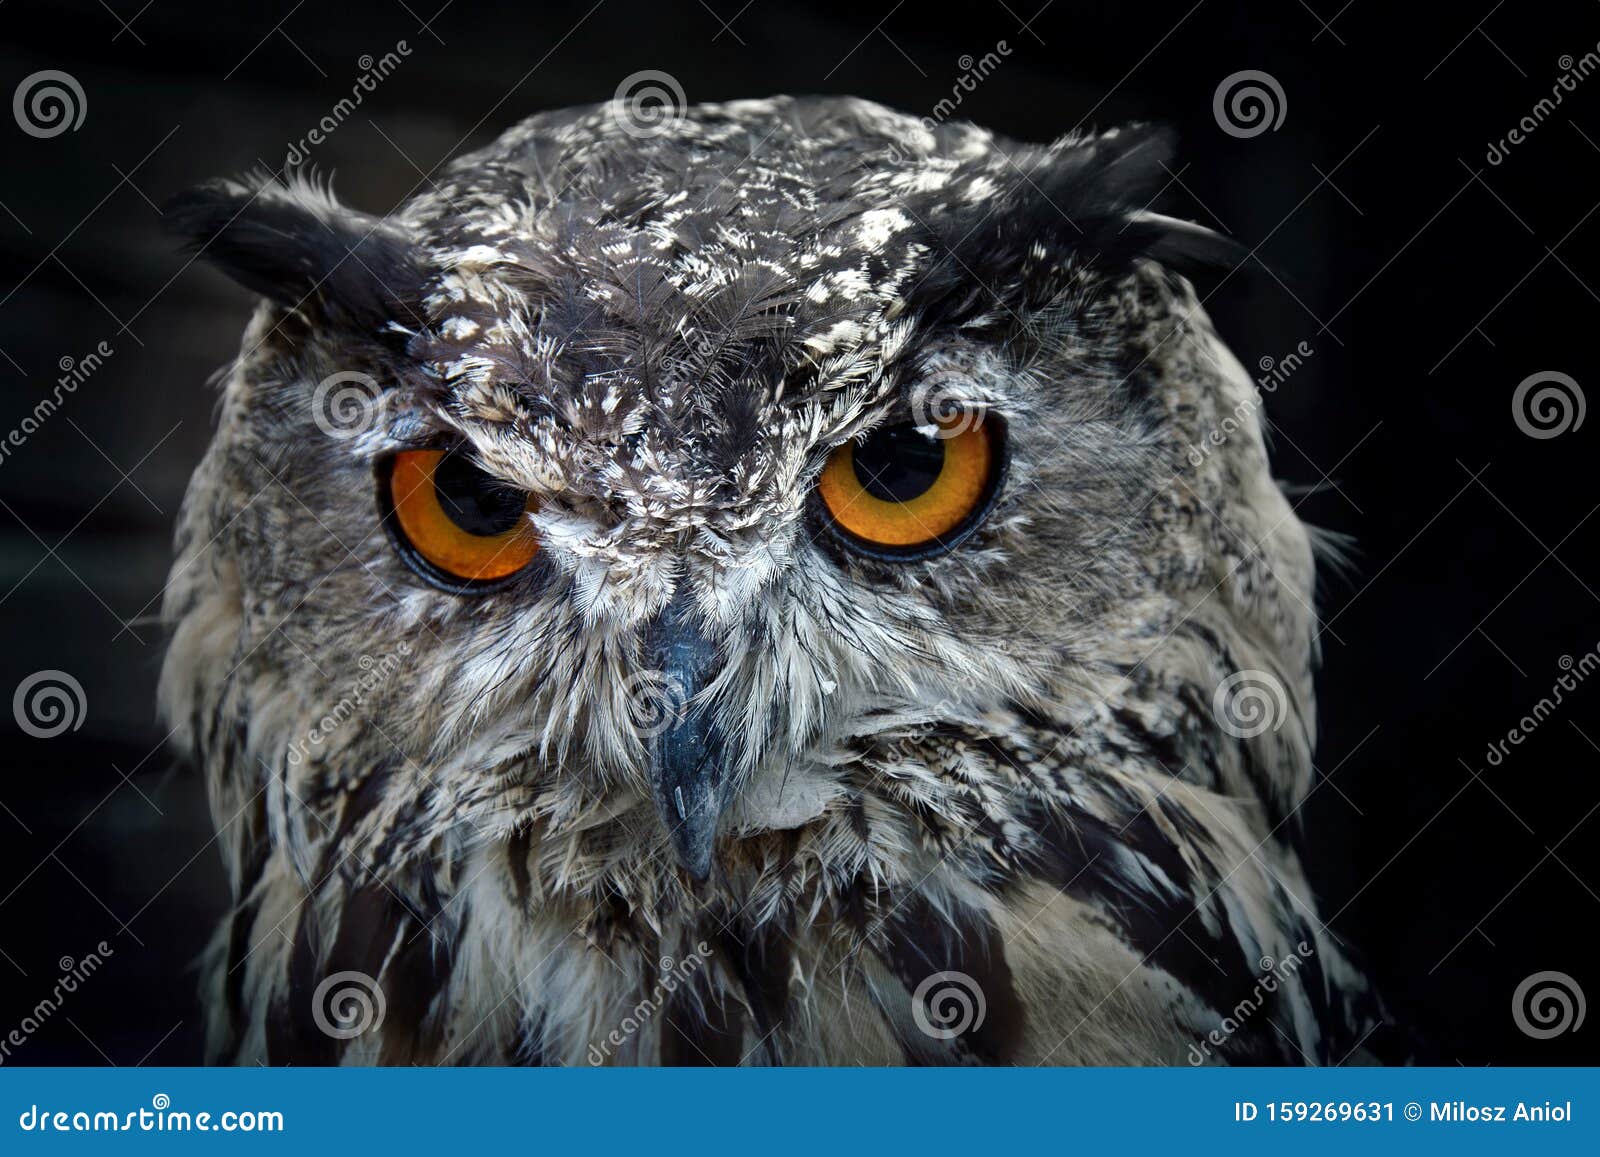 portrait of eurasian eagle owl